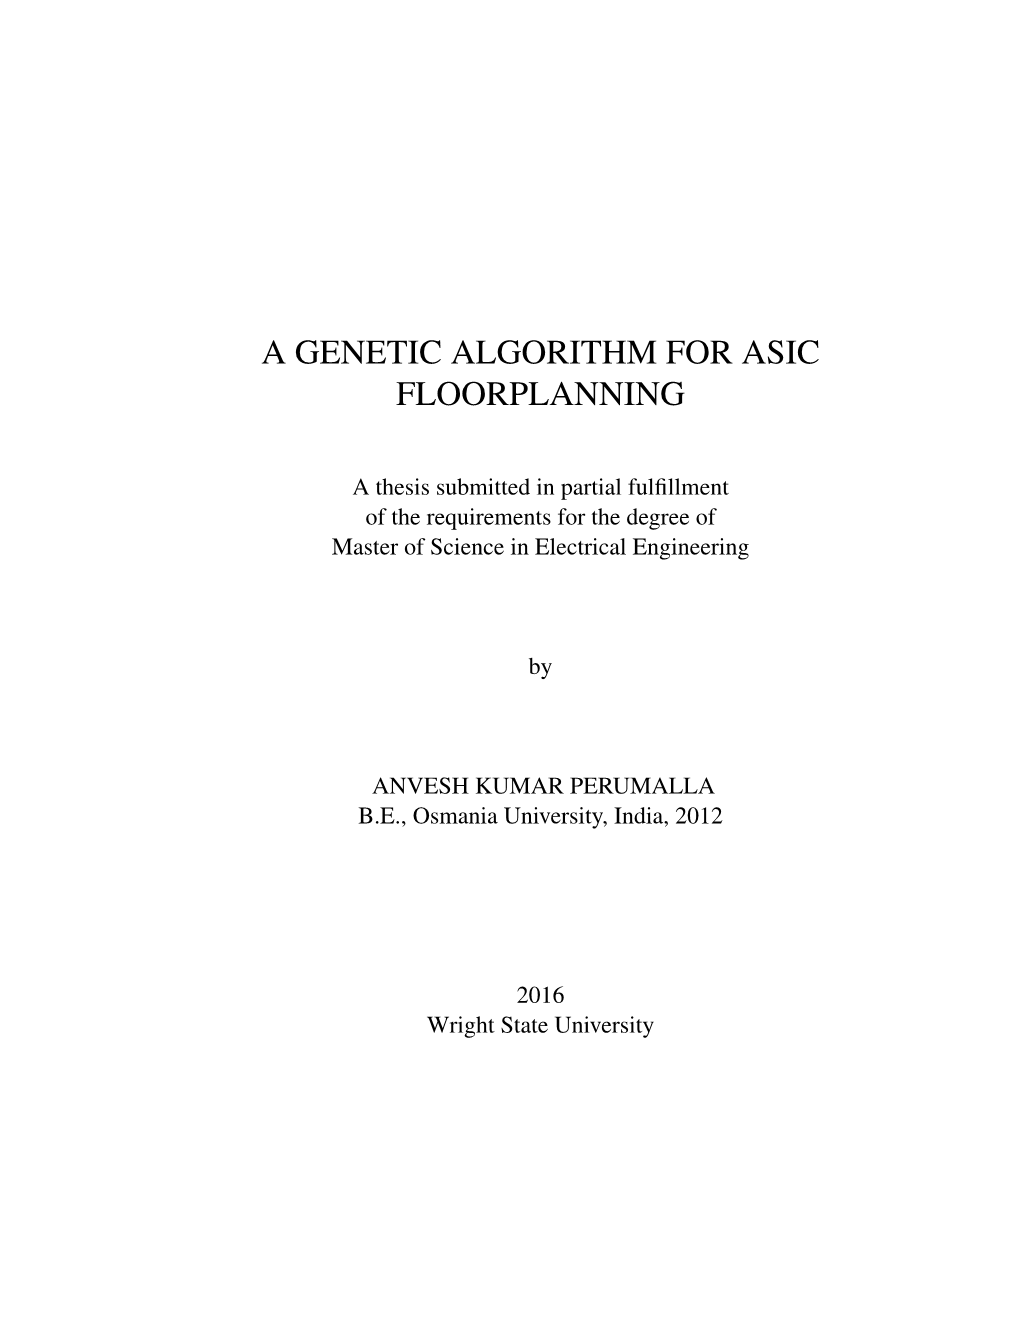 A Genetic Algorithm for Asic Floorplanning